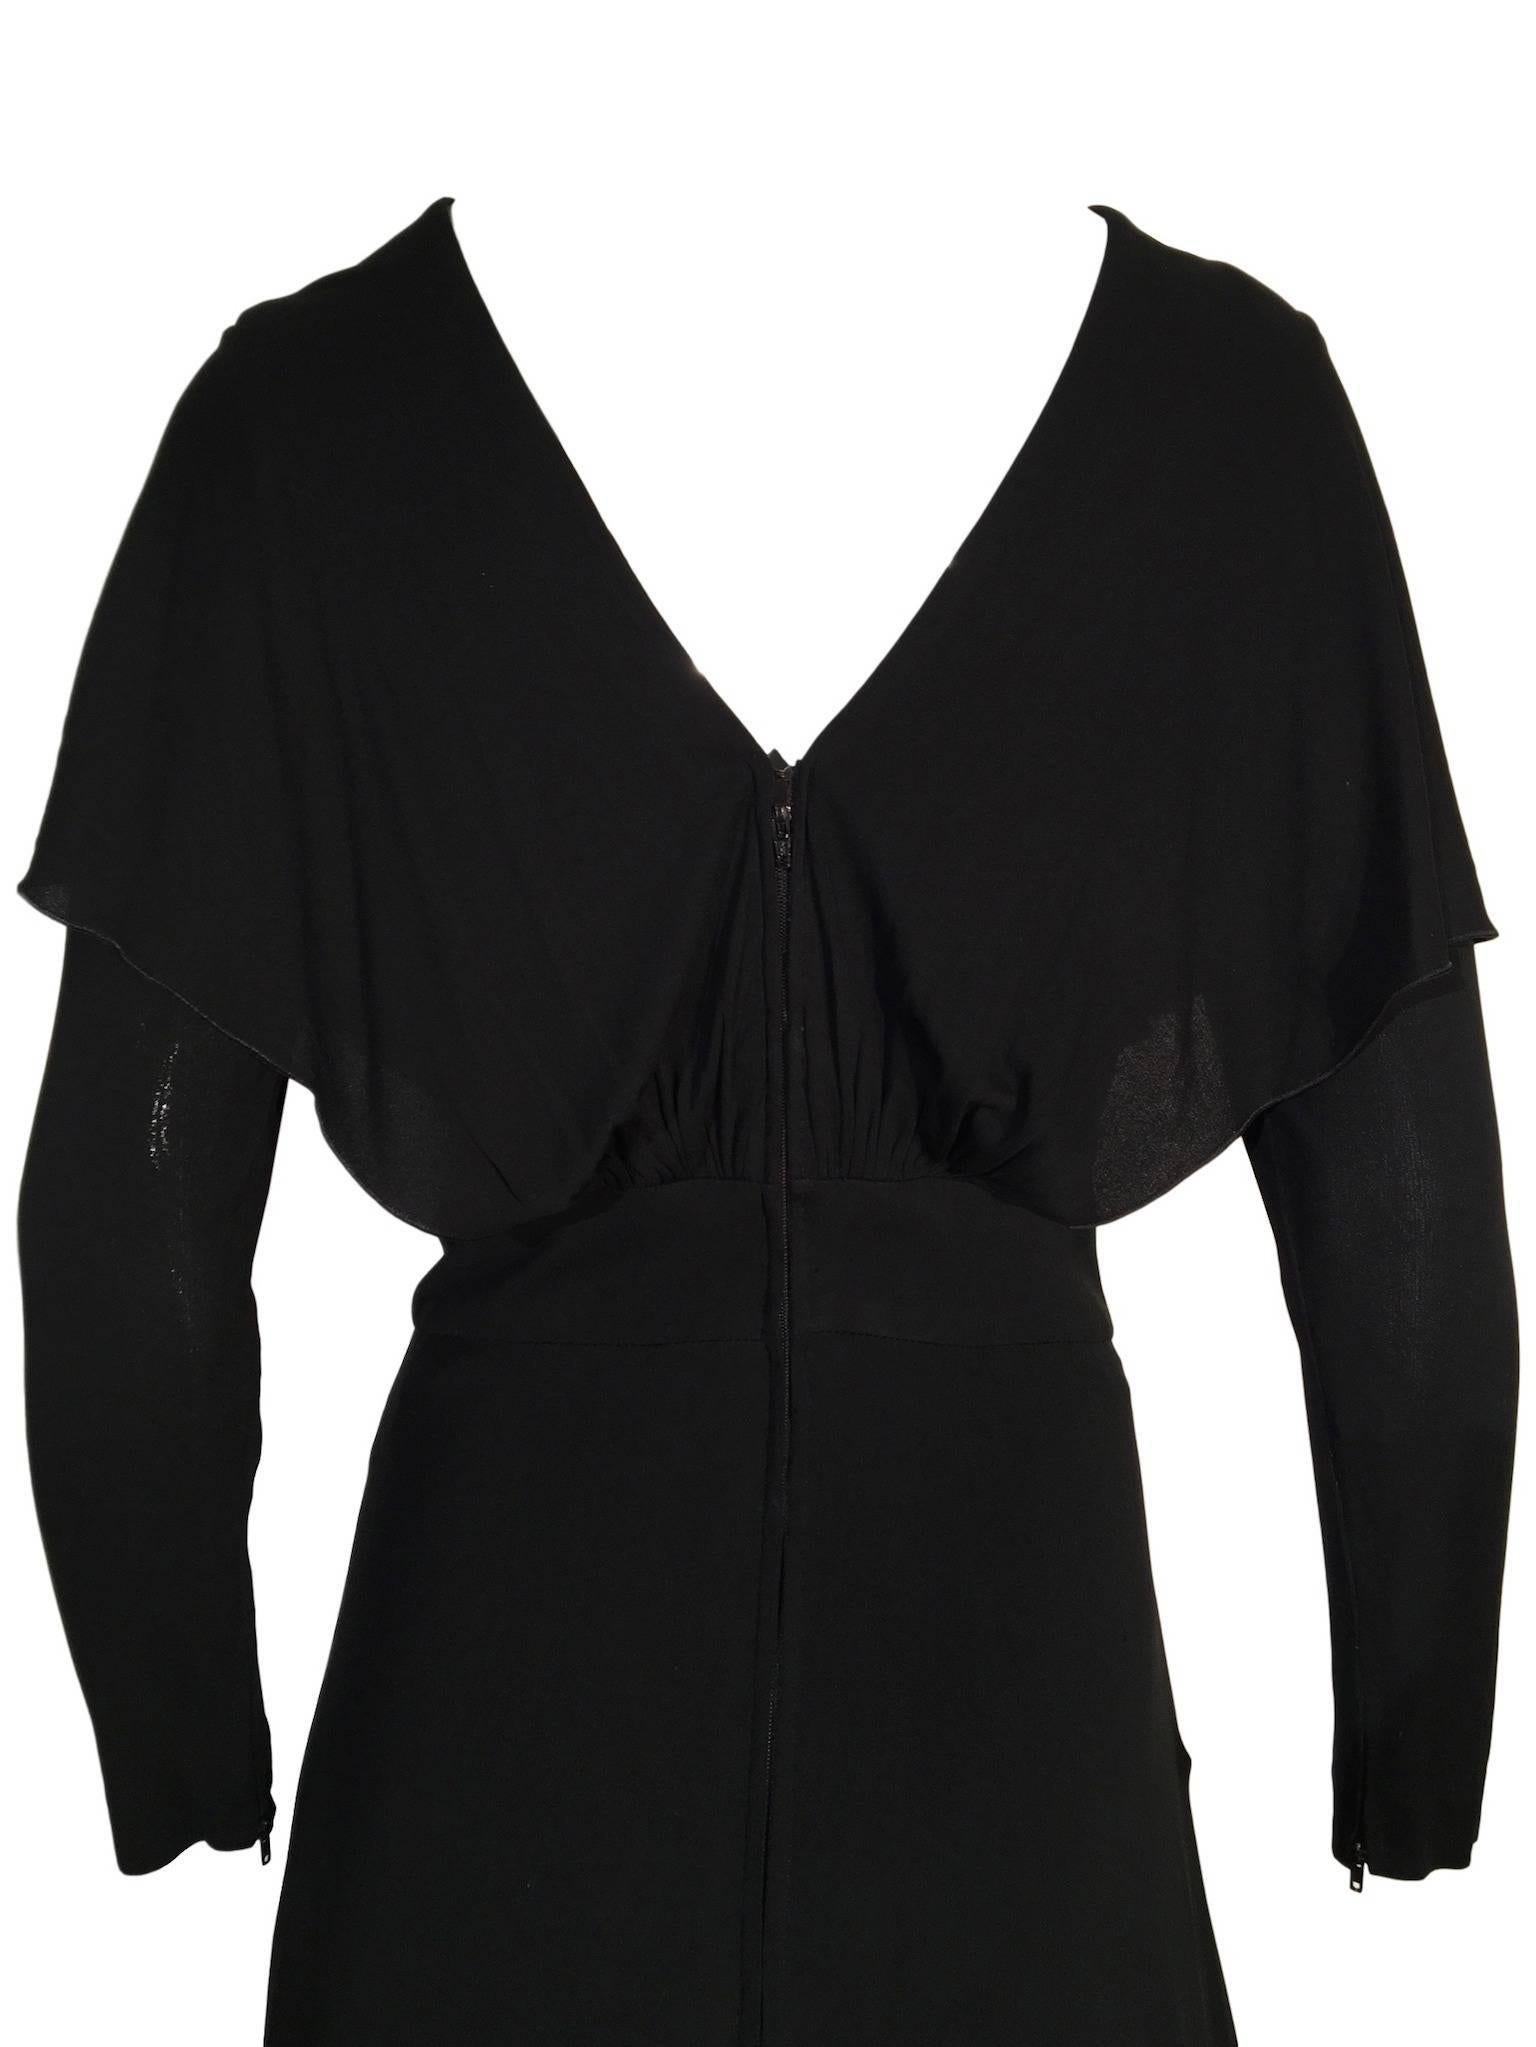 Black Vintage black Silk Jersey Full Length Gathered Art Deco Style Evening Dress